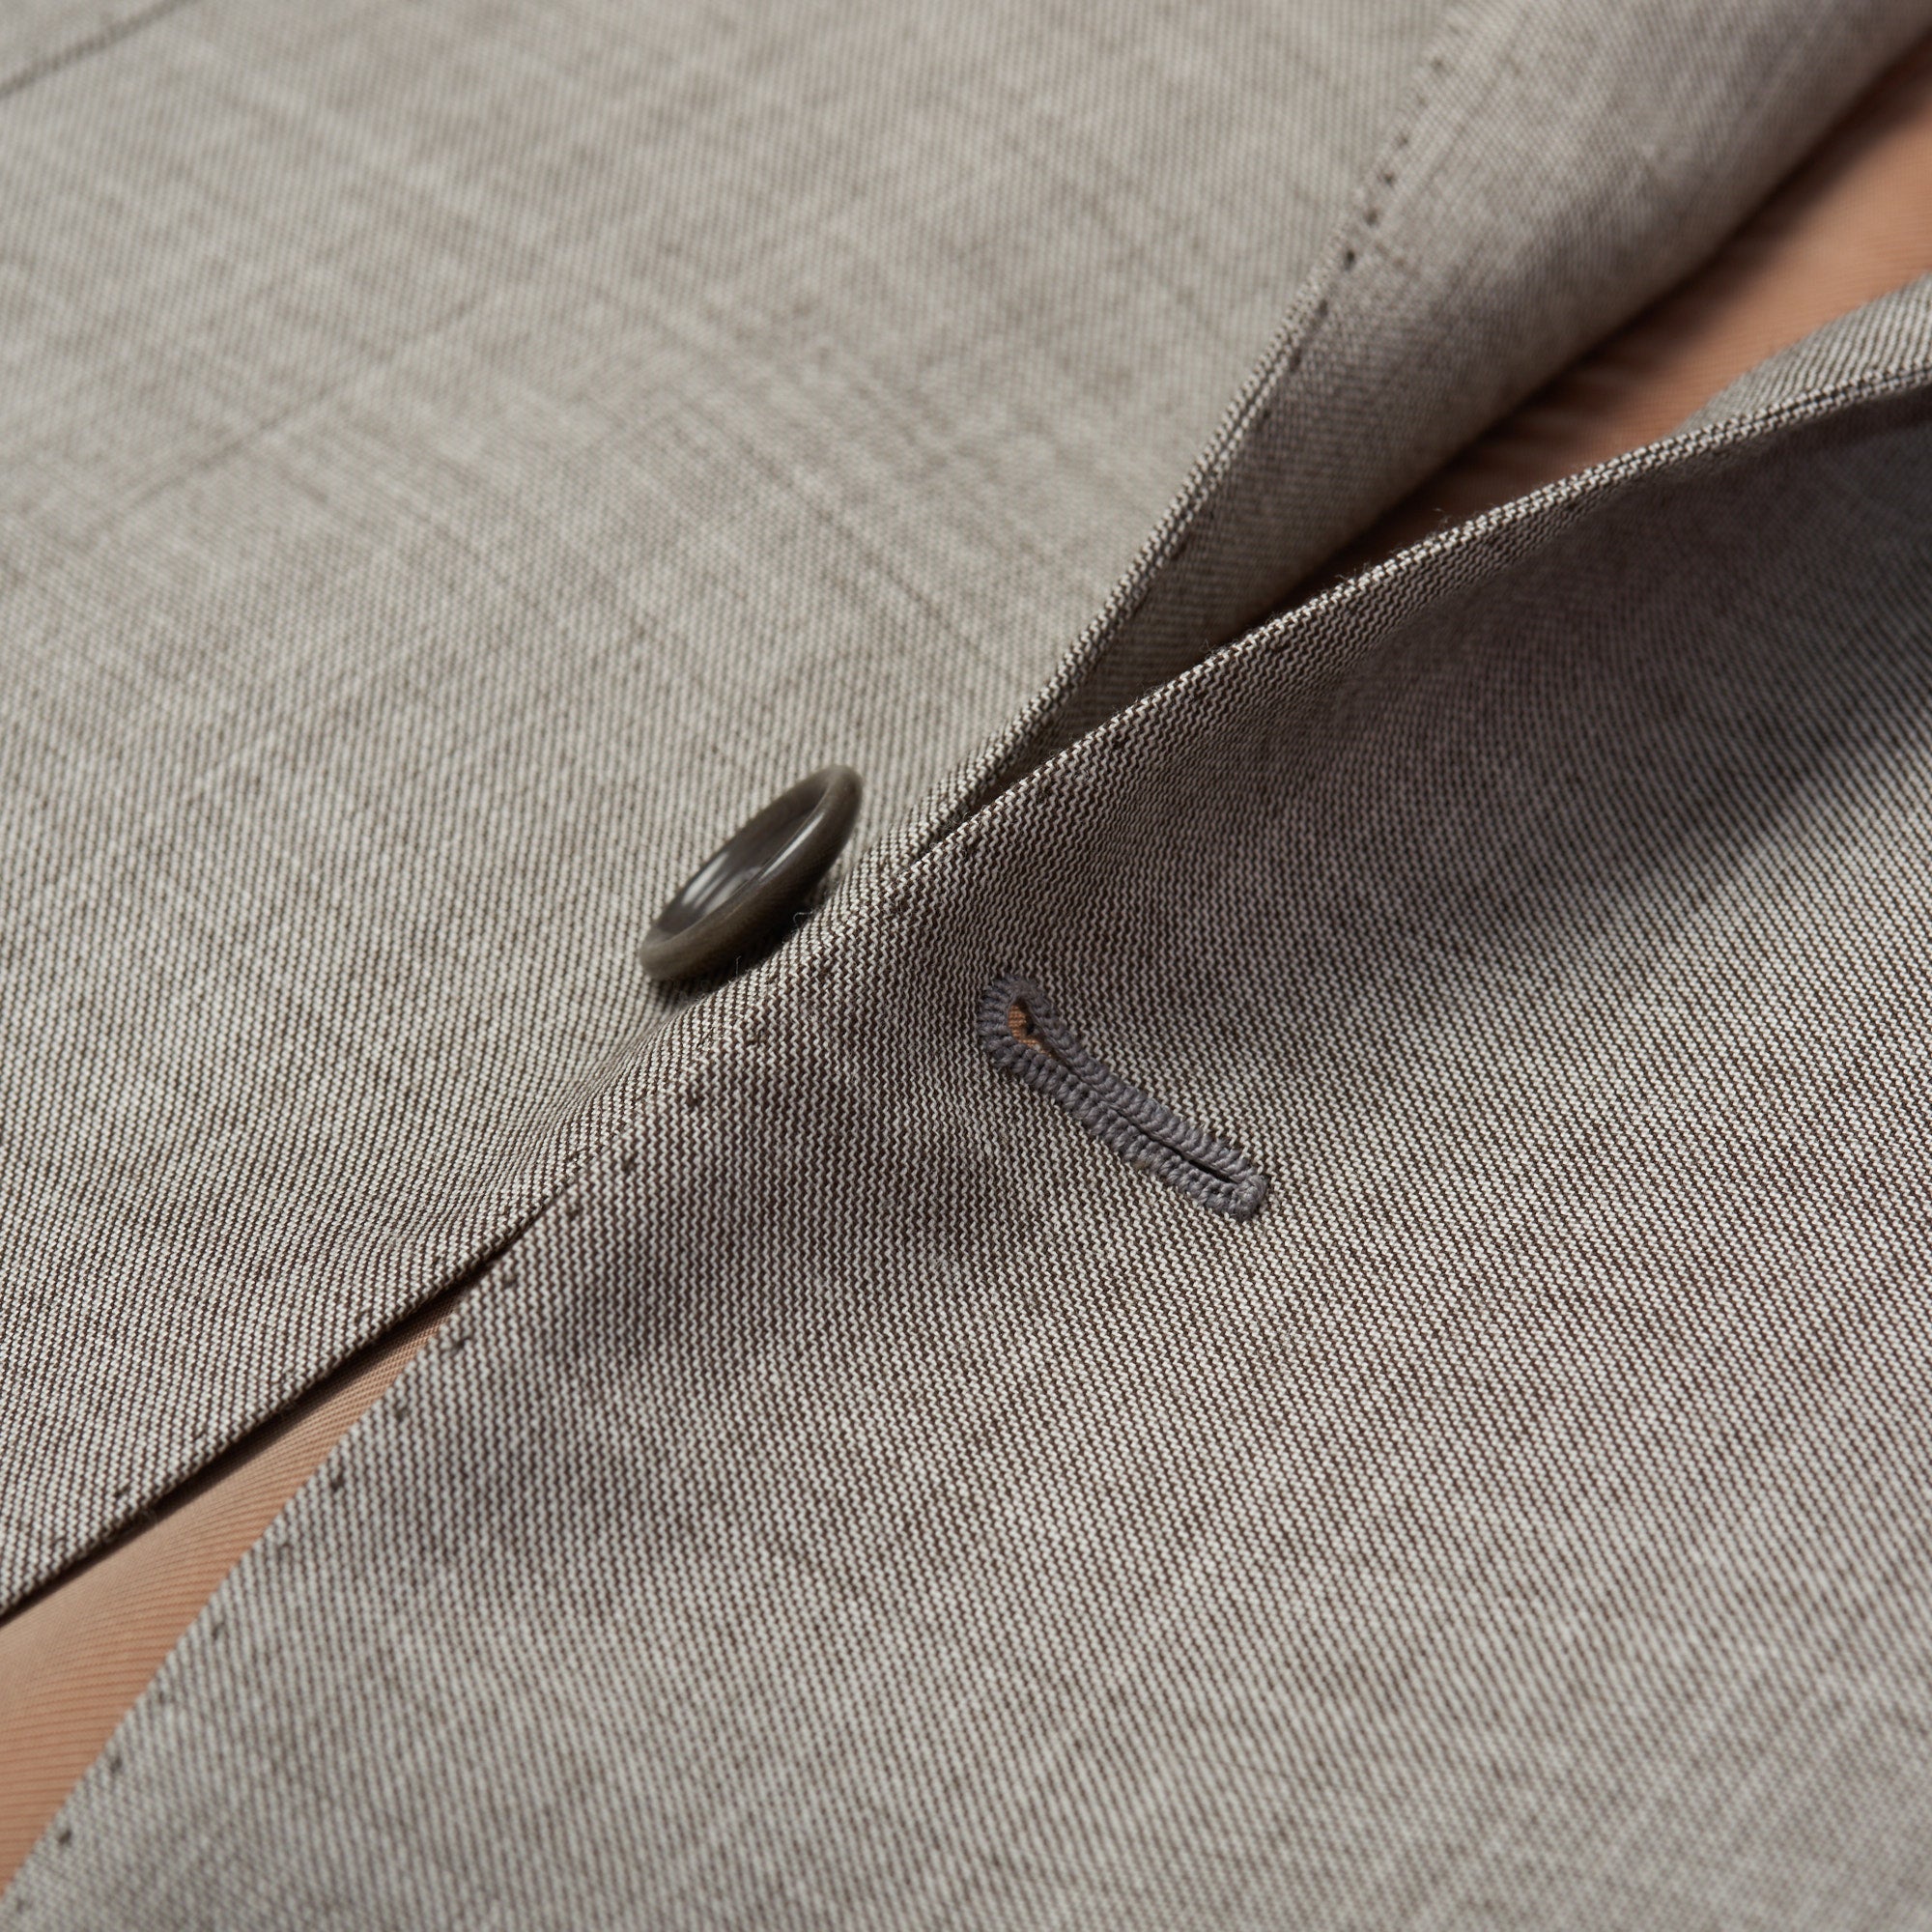 CESARE ATTOLINI Napoli Handmade Gray Wool Super 150's Suit EU 50 NEW US 40 CESARE ATTOLINI